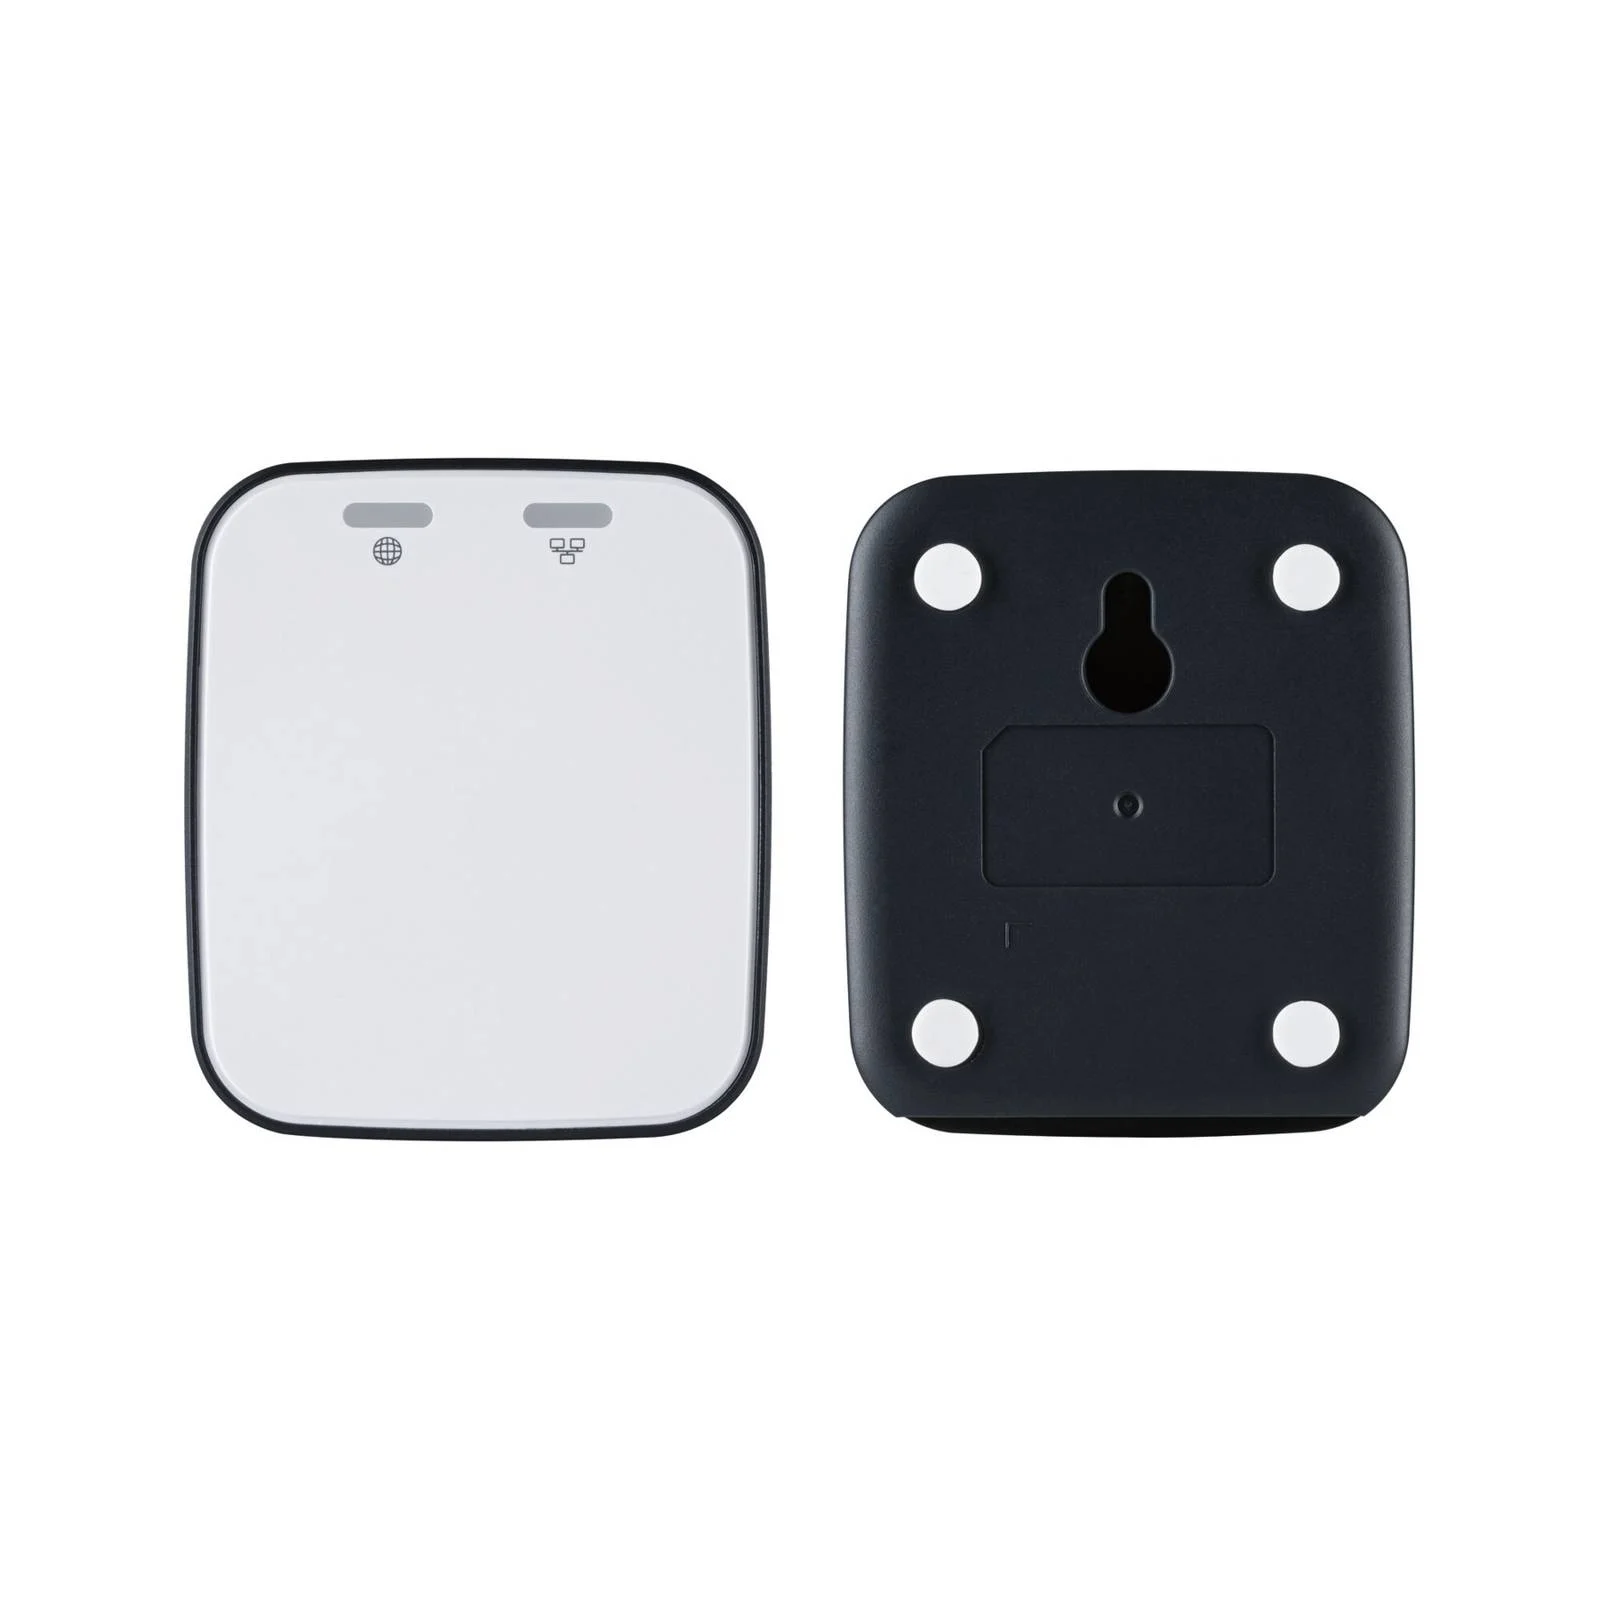 Paulmann Smart Home Bundle ZigBee 4x E27 9,3W LED matt RGBW günstig online kaufen